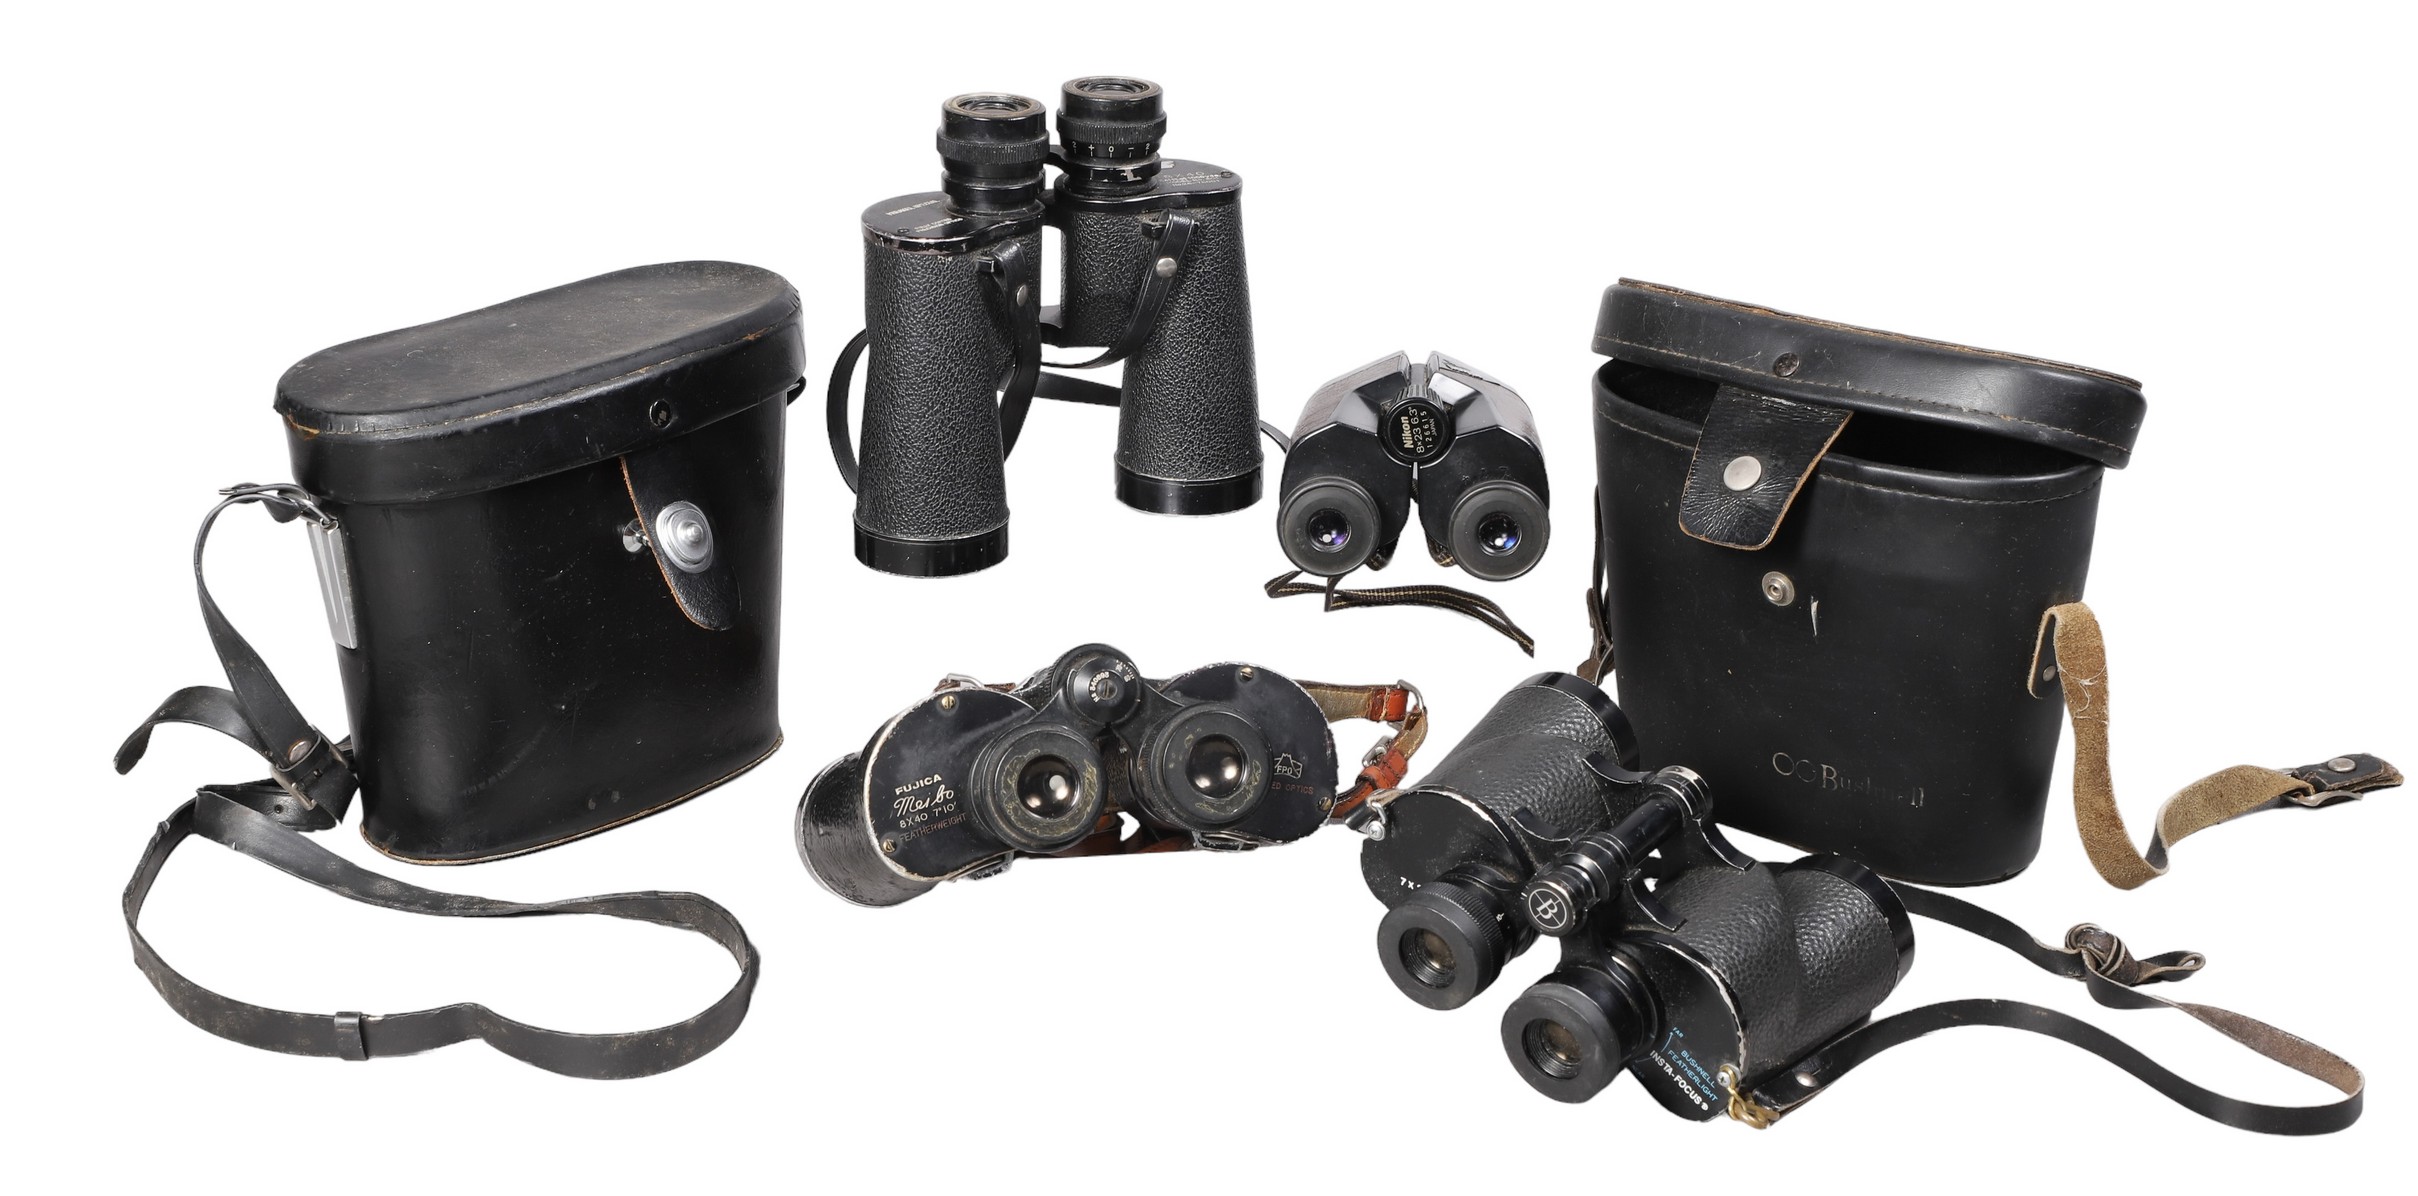  4 Pair binoculars c o Mirakel 2e0c6a